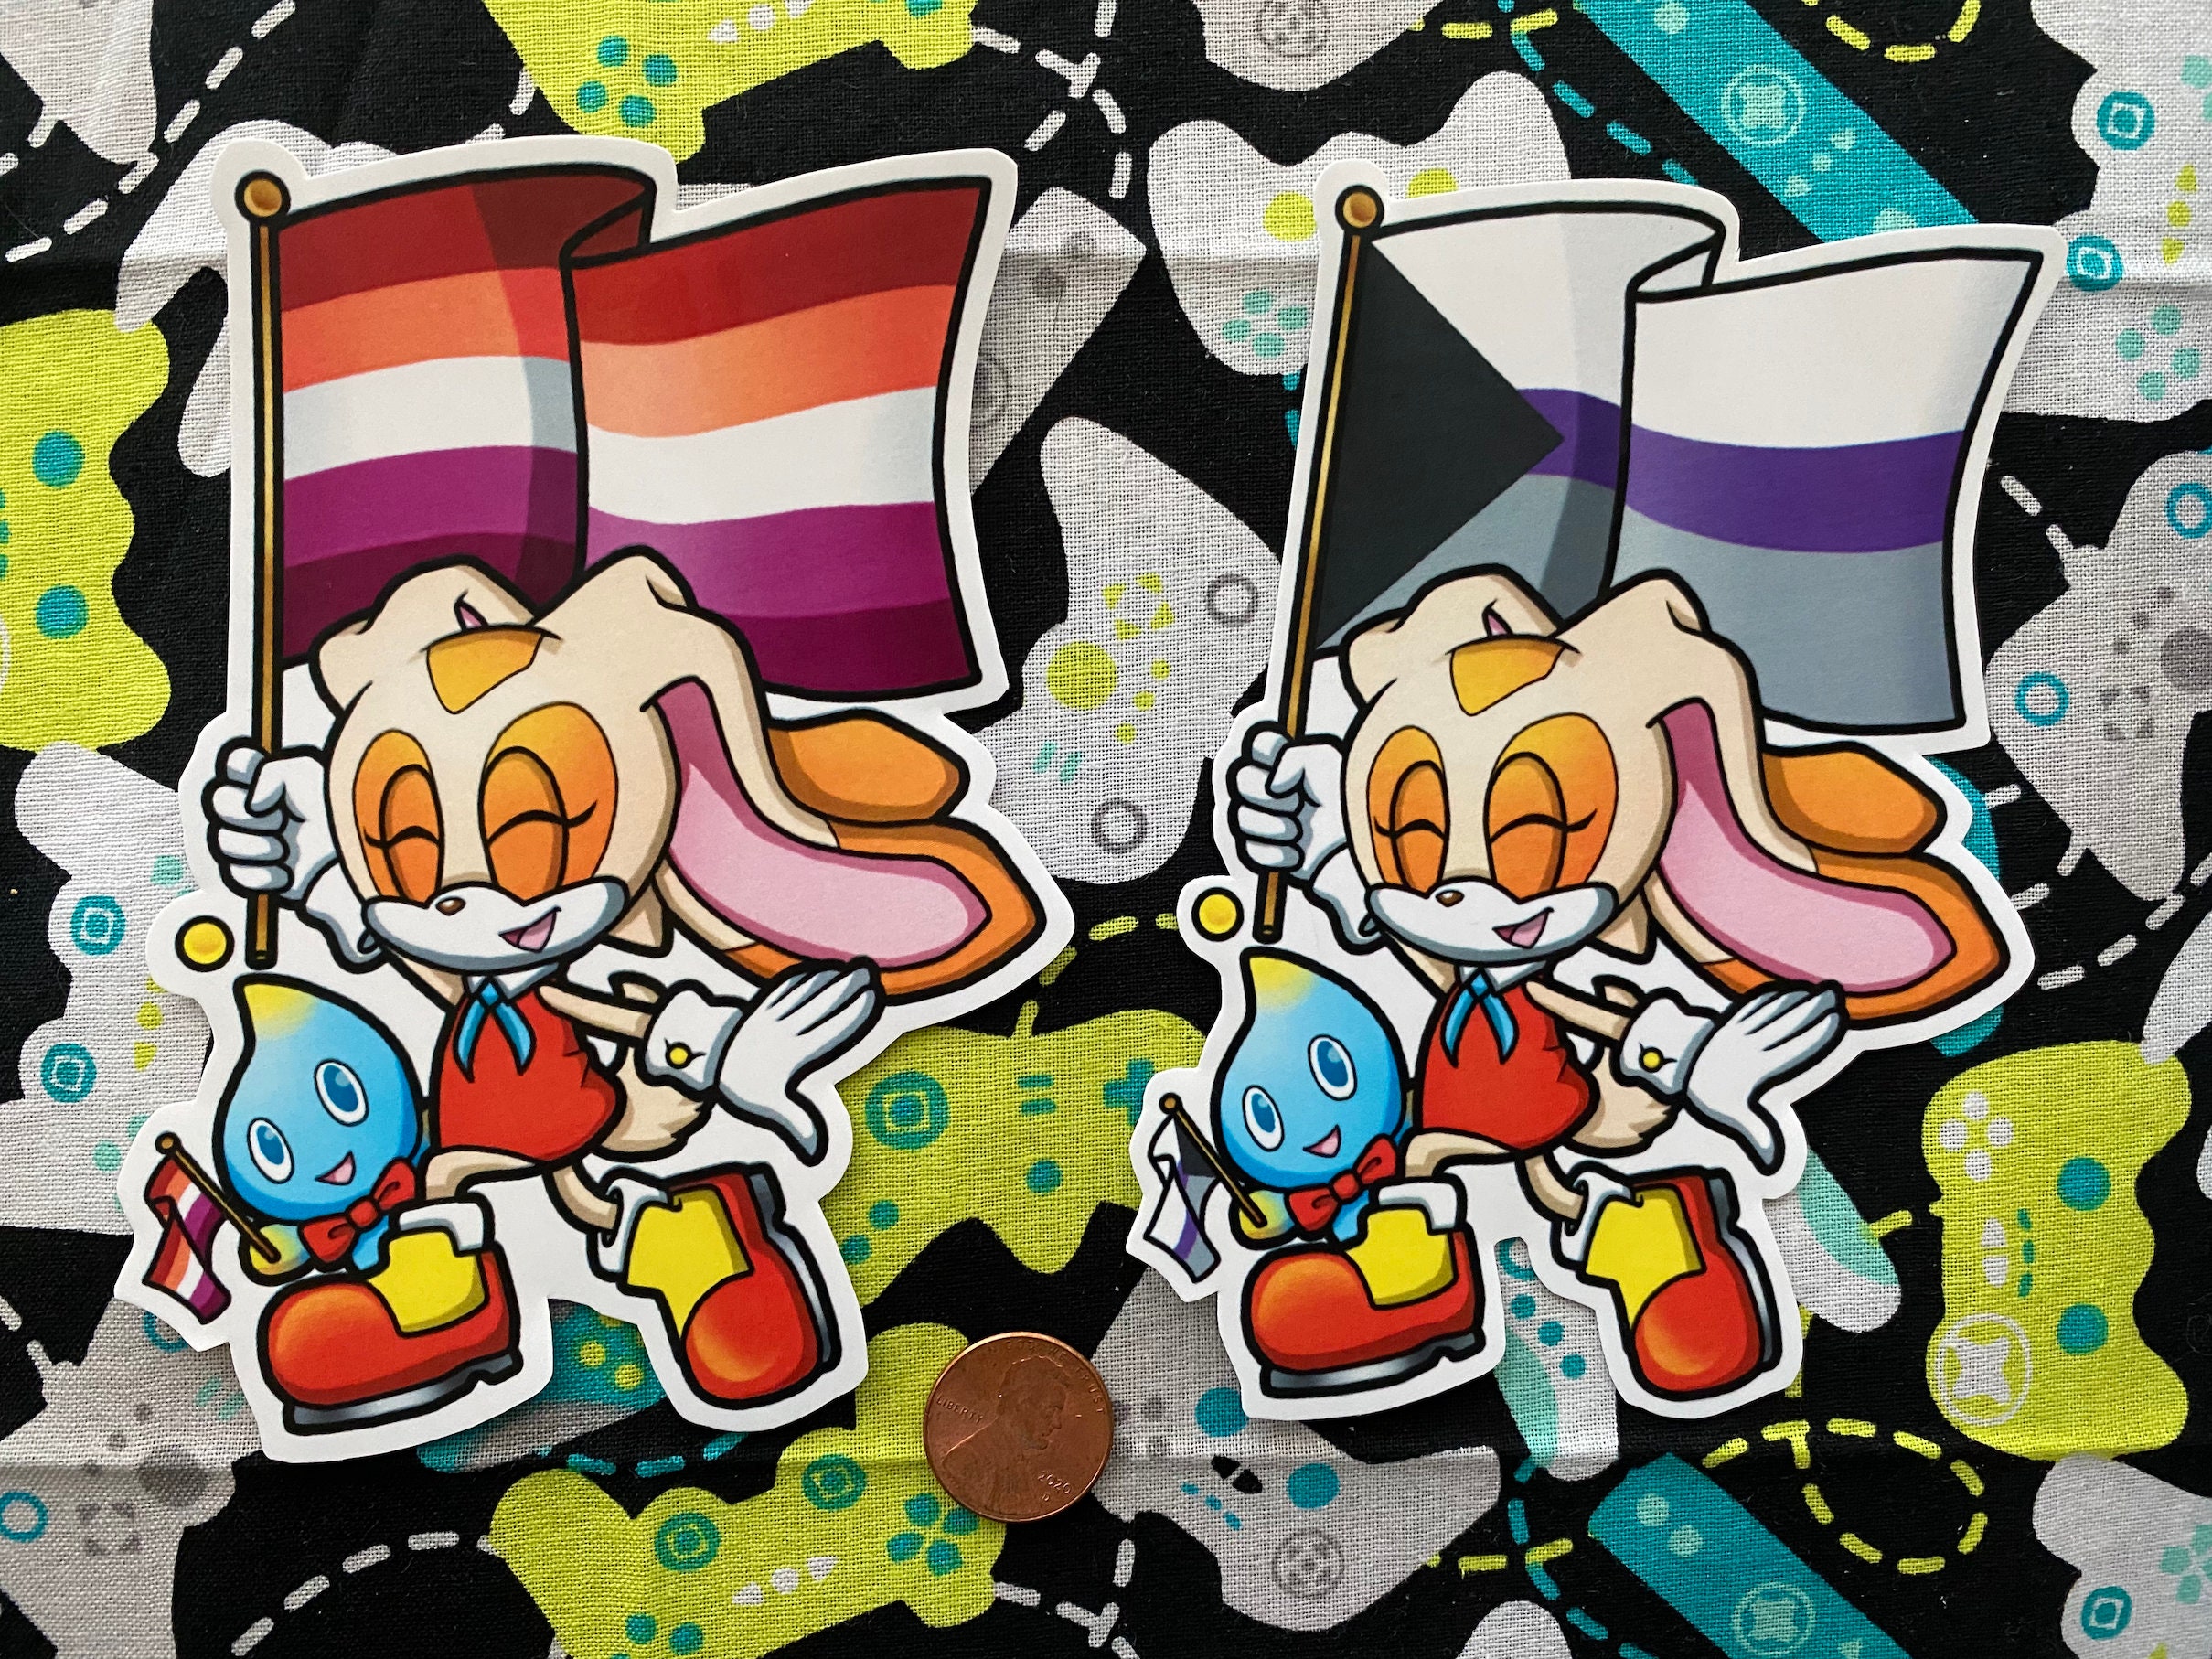 SEGA Sonic the Hedgehog Amy Rose LGBT Pride Flag Vinyl -  Portugal